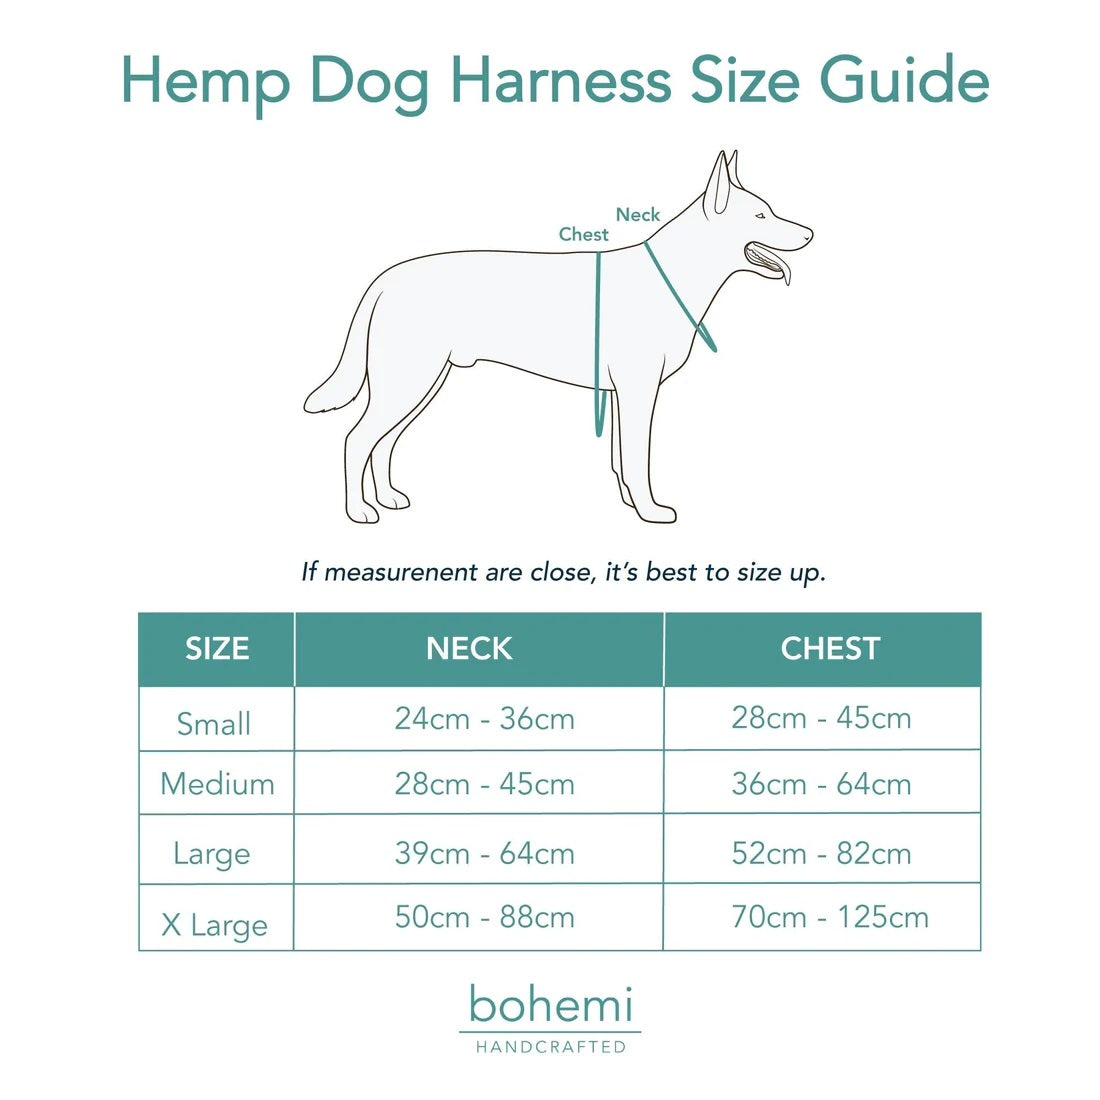 Bohemi Dog Harness